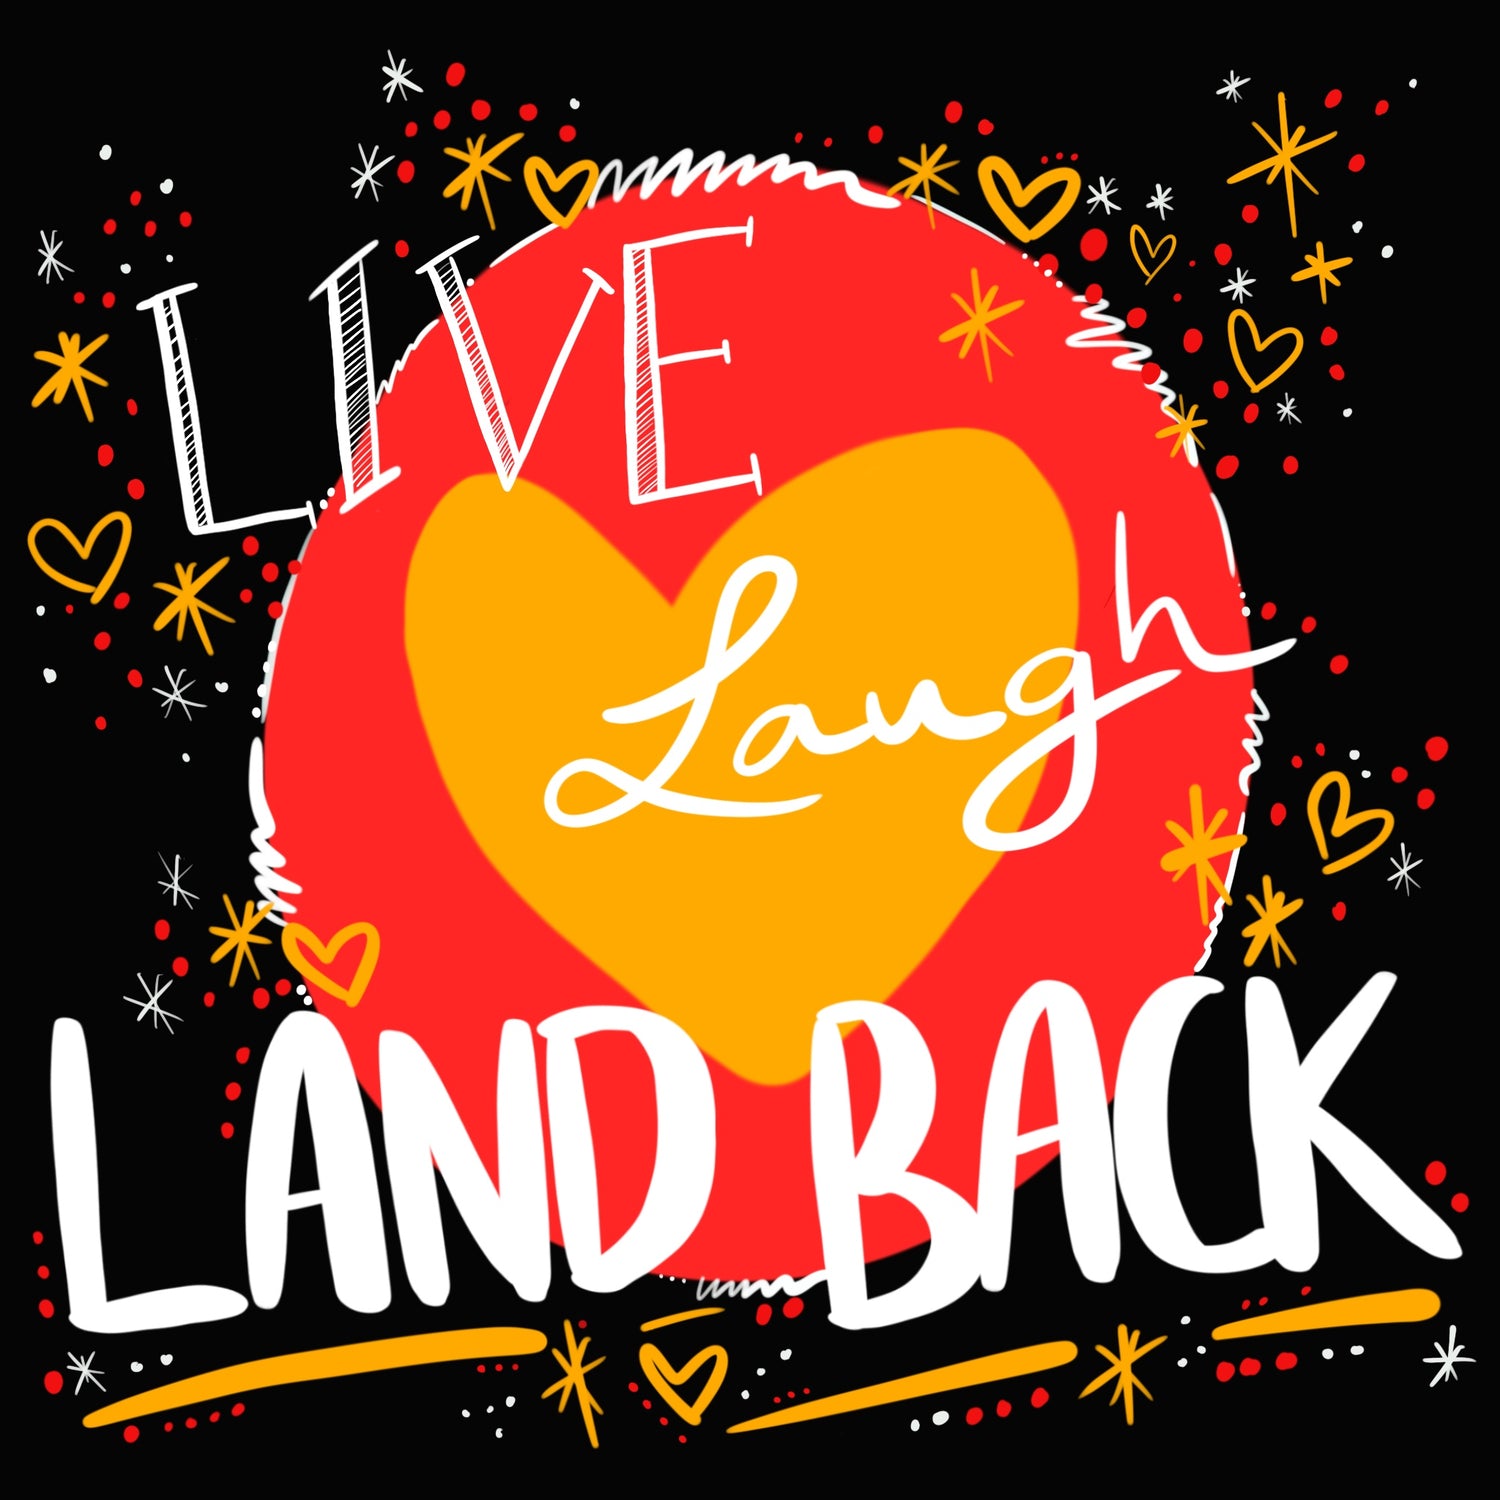 Live, Laugh, Land Back